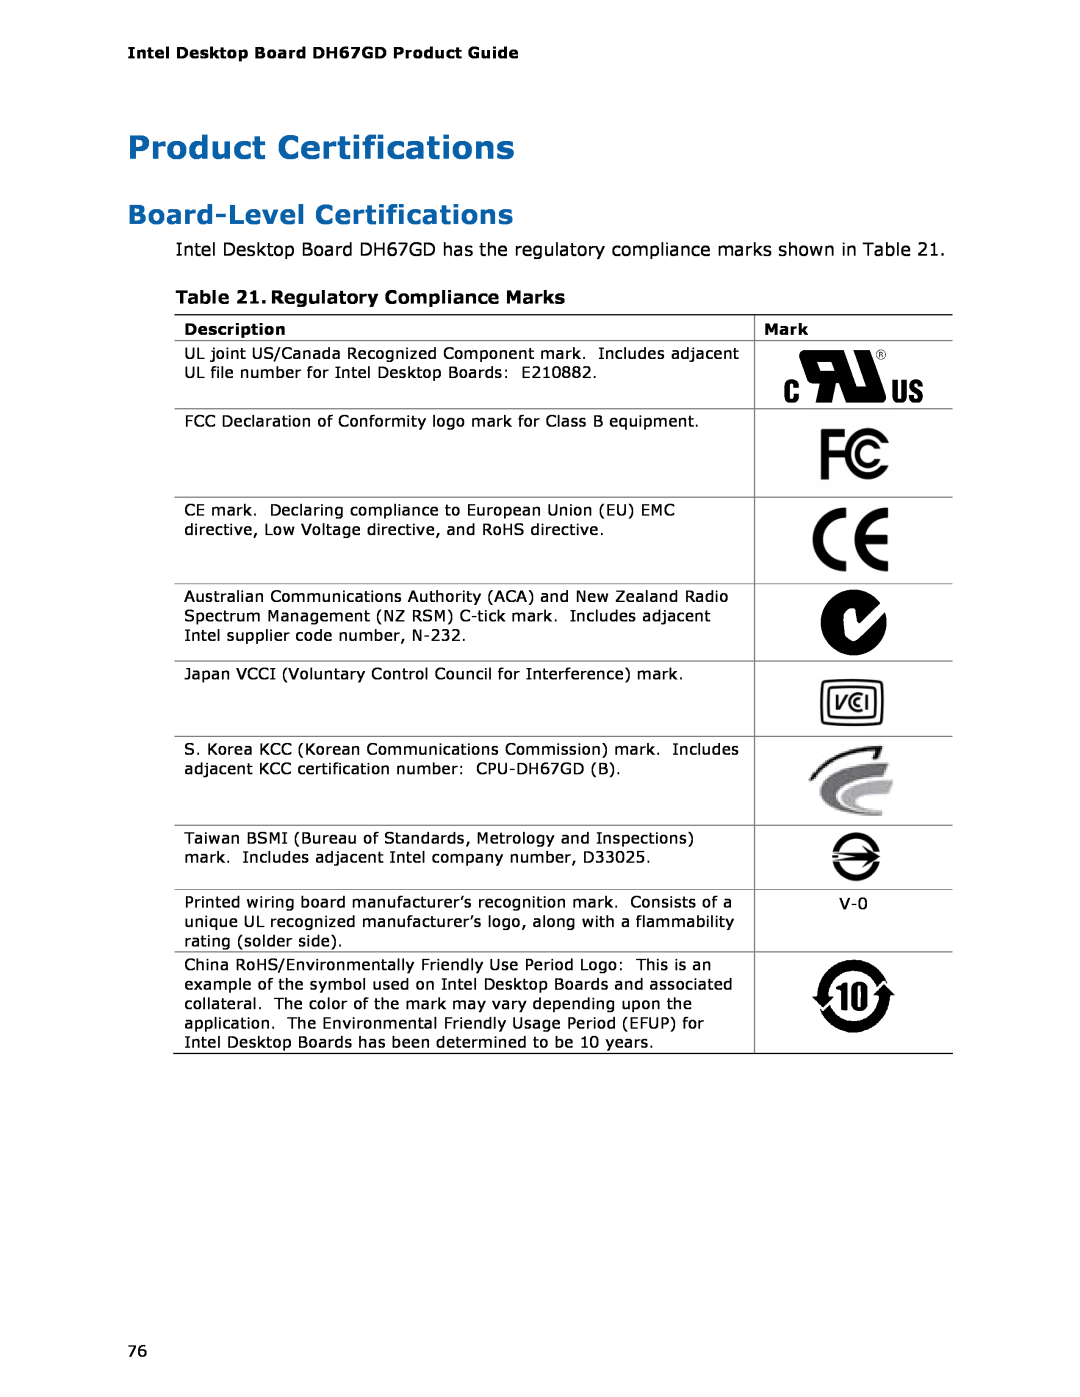 Intel BLKDH67GDB3, G13841-001 manual Product Certifications, Board-Level Certifications, Regulatory Compliance Marks 